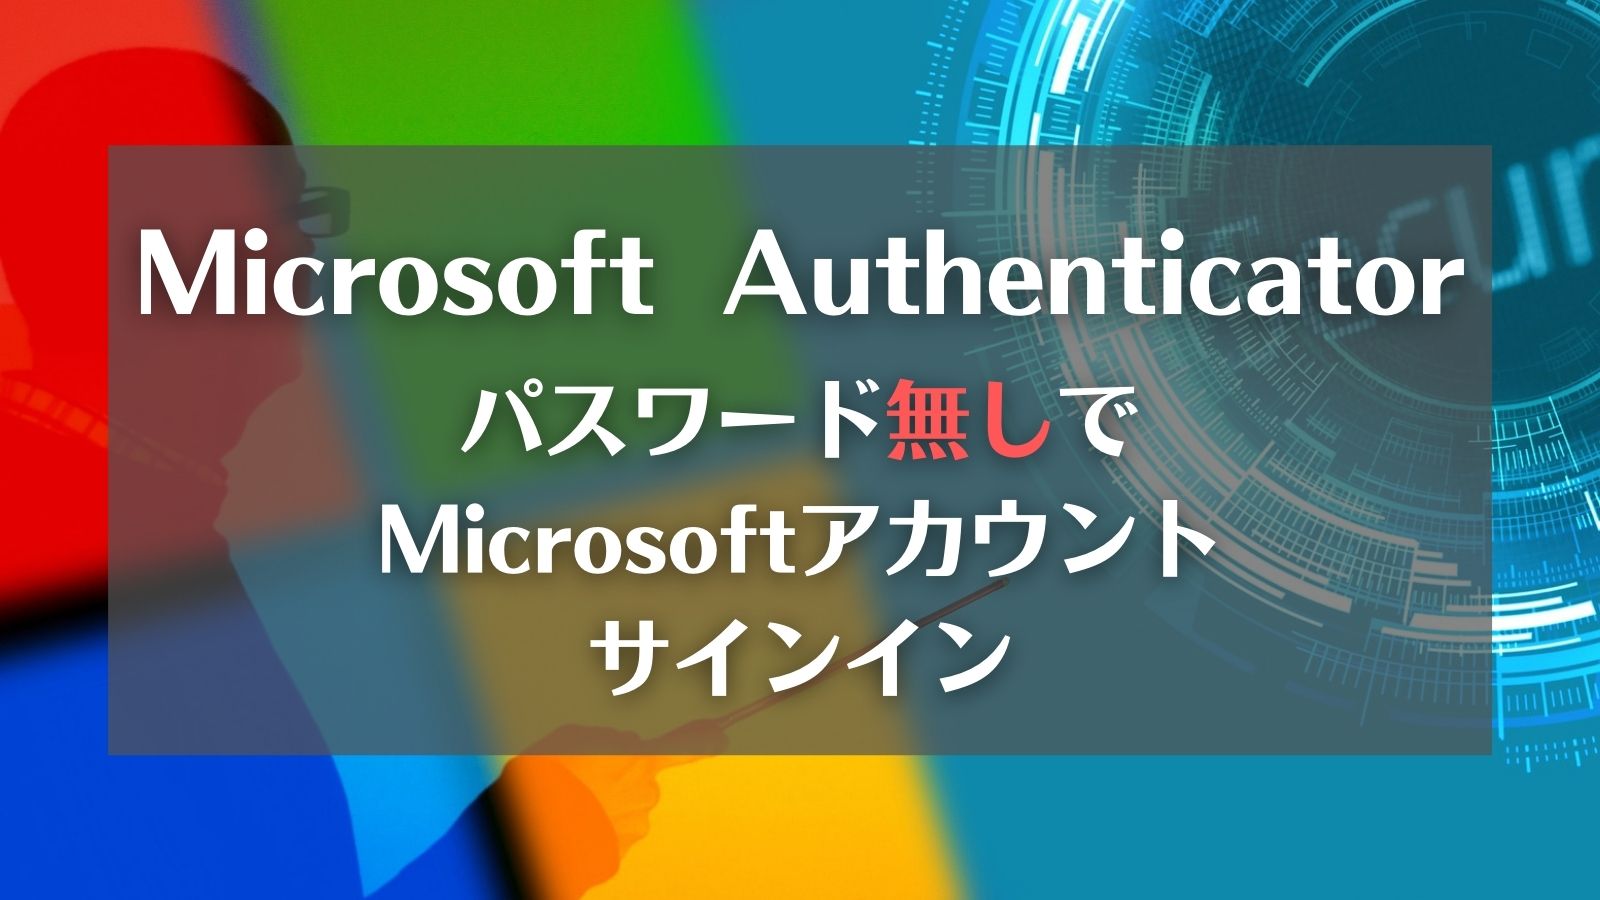 MicrosoftAuthenticator_アイキャッチ画像